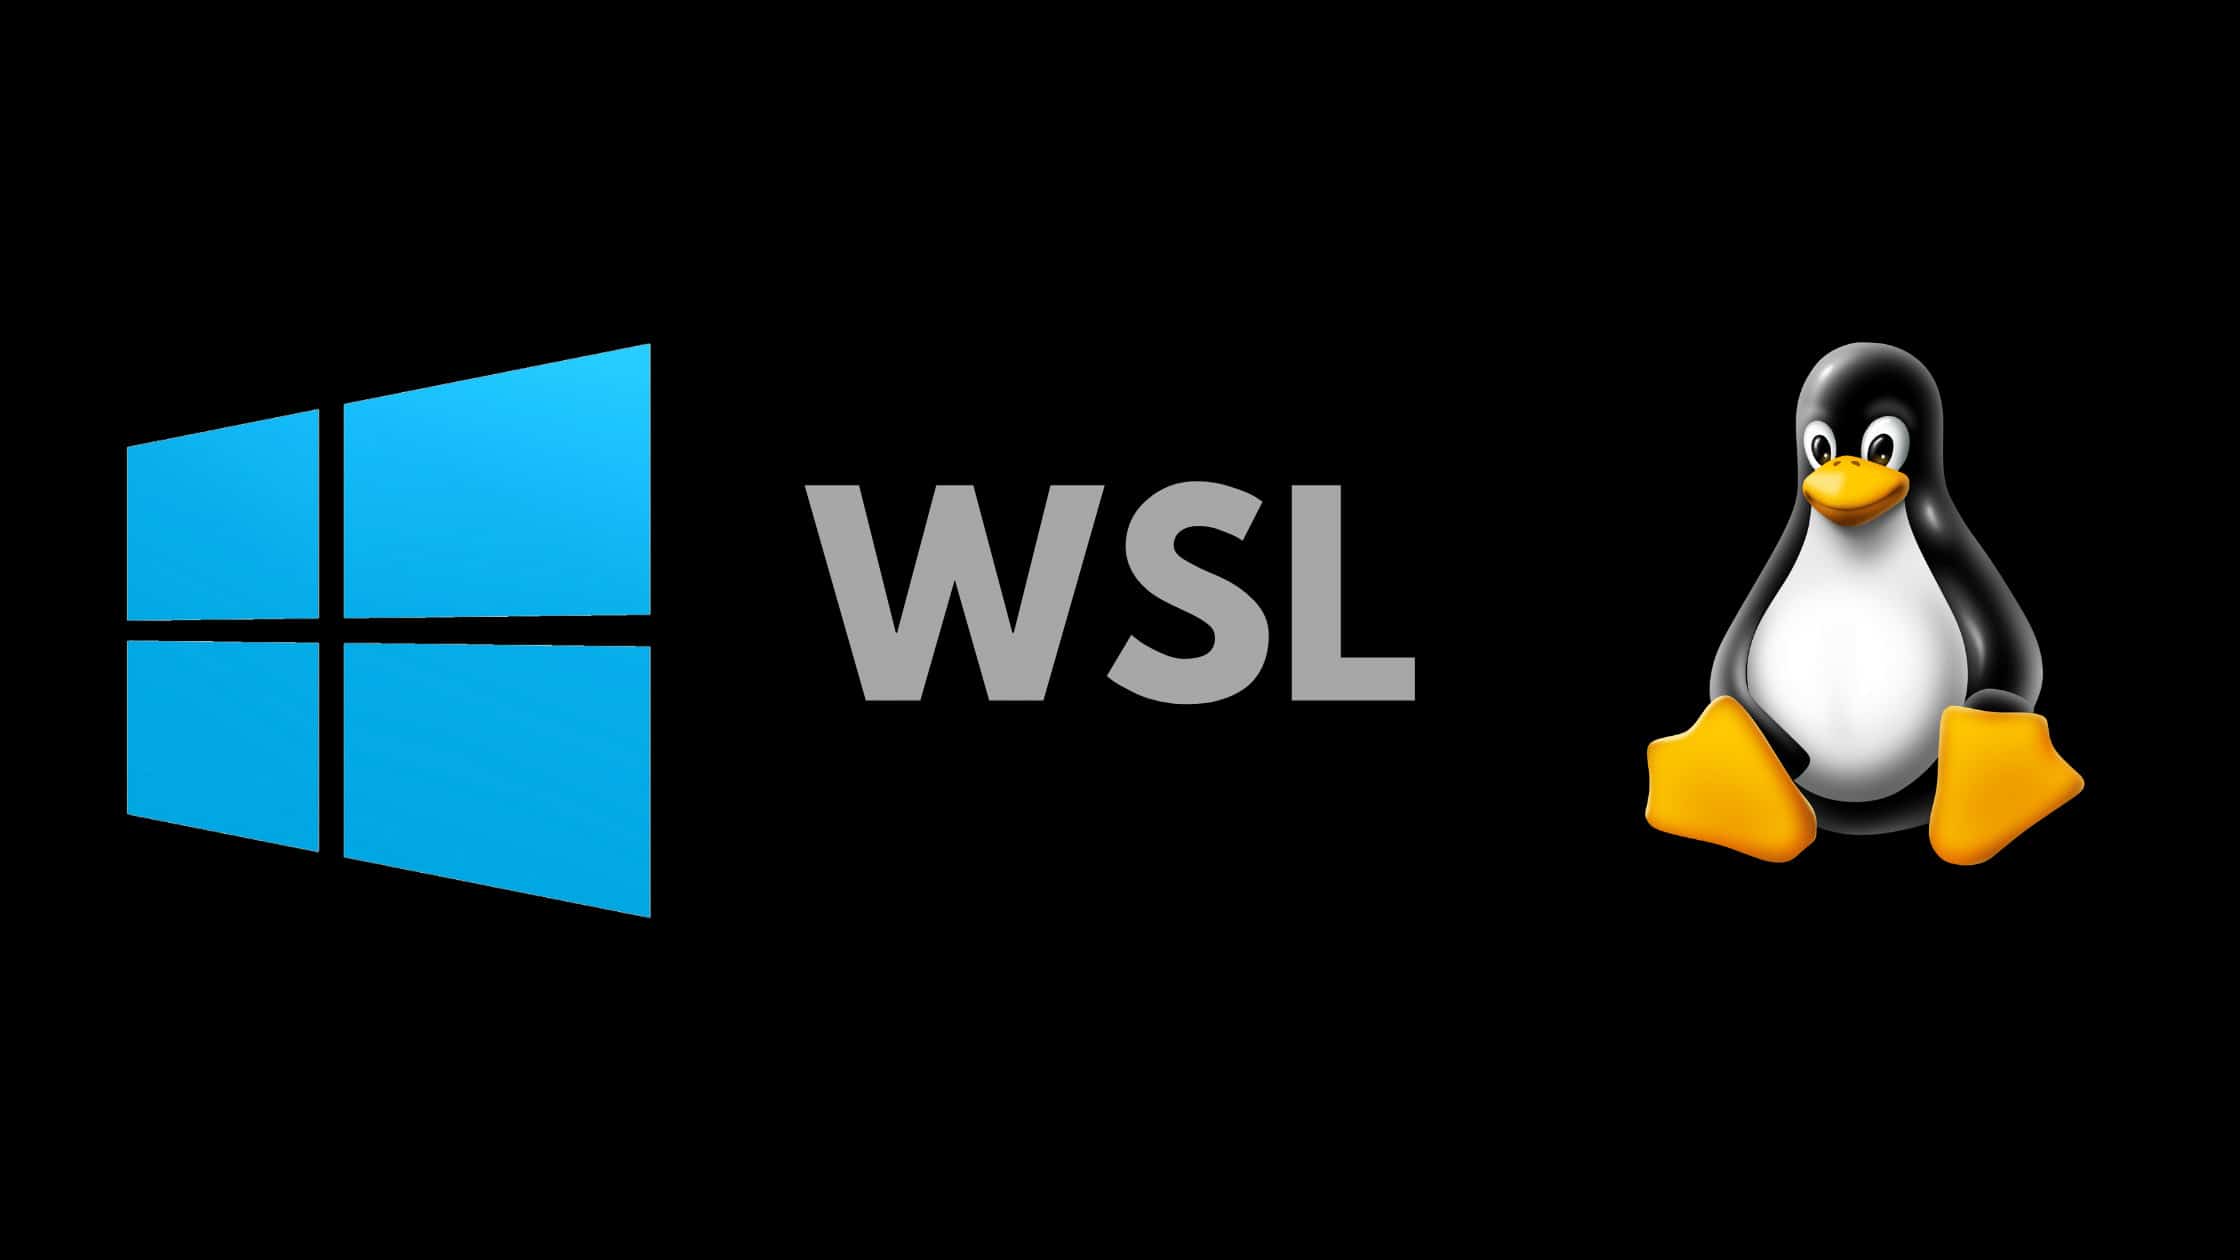 Step By Step Procedure To Install Wsl2 On Windows And Run Ubuntu On Windows Using Wsl2